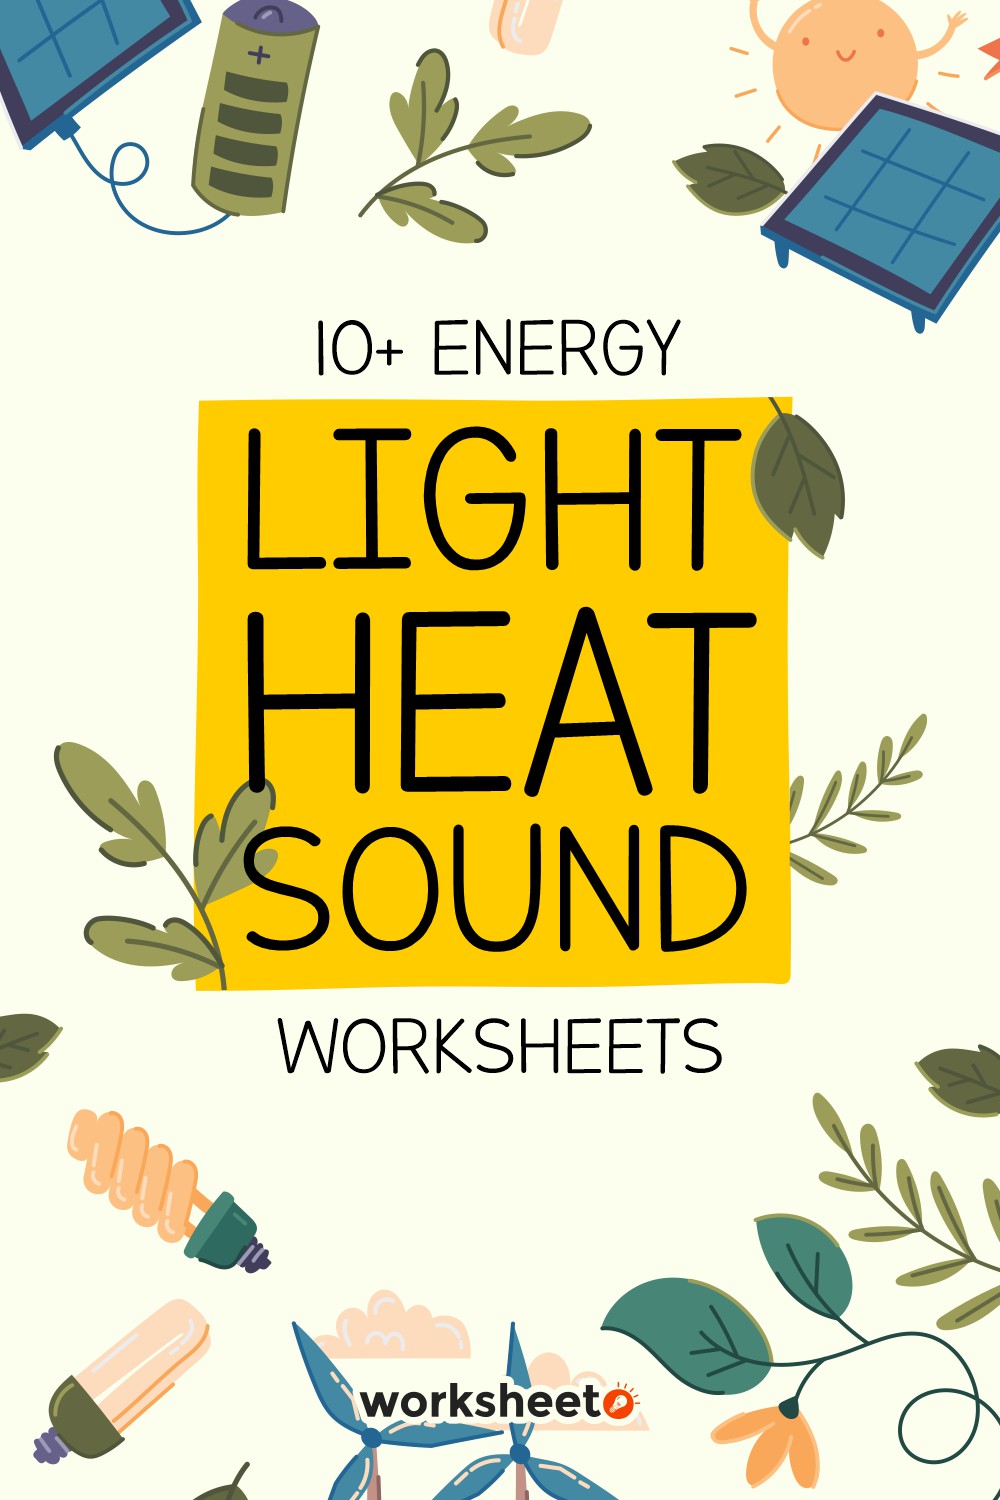 Energy Light Heat Sound Worksheets